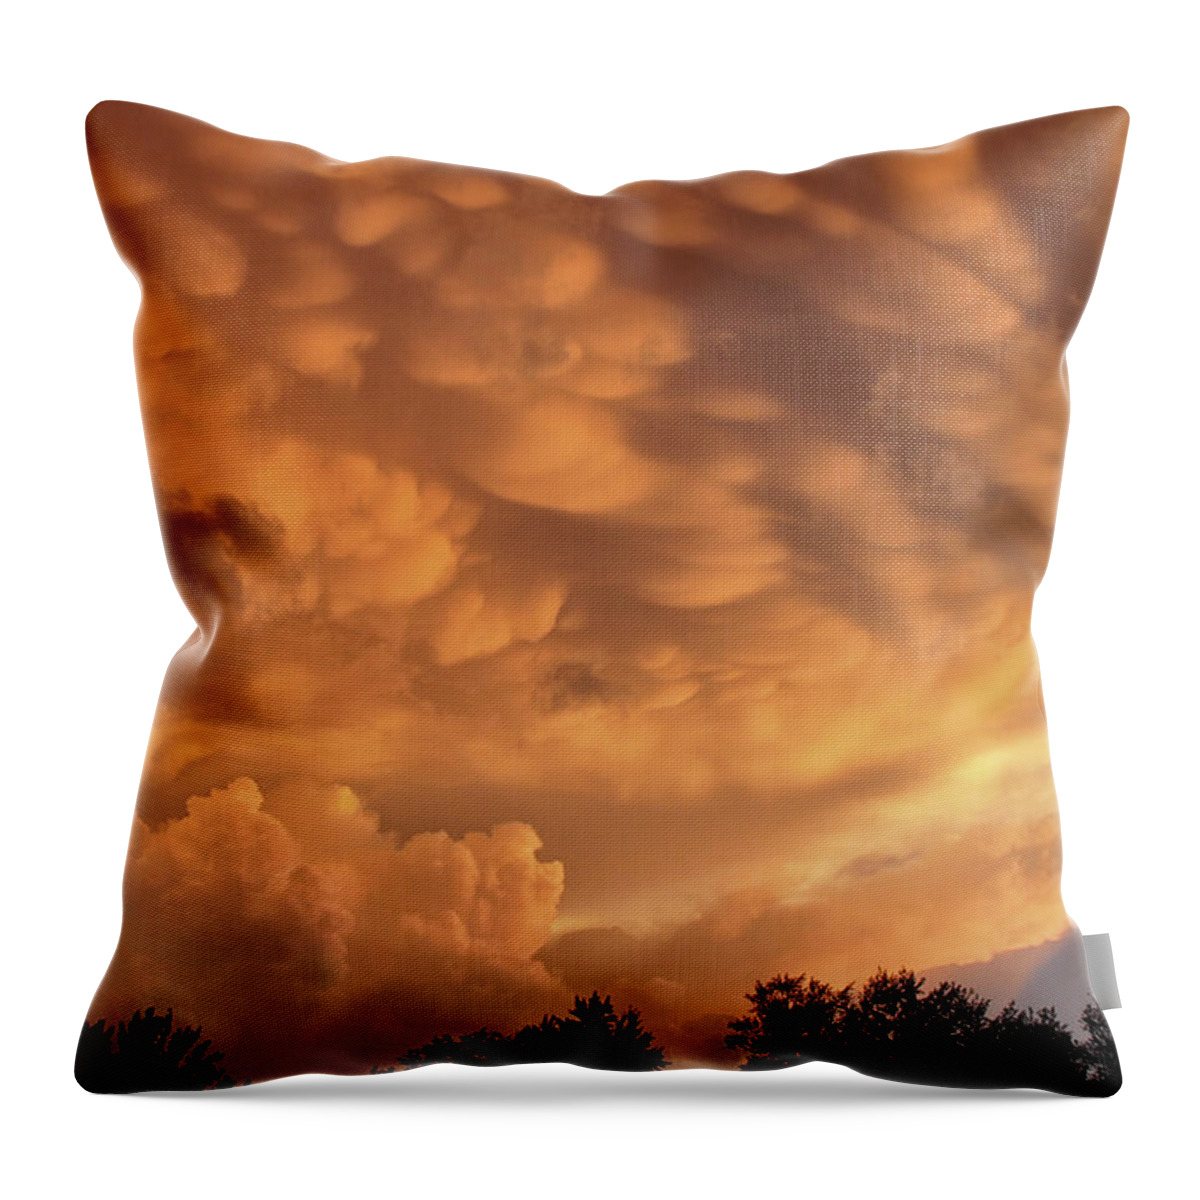 Photograph Throw Pillow featuring the photograph Dramatic Mammatus Clouds by Linda Goodman